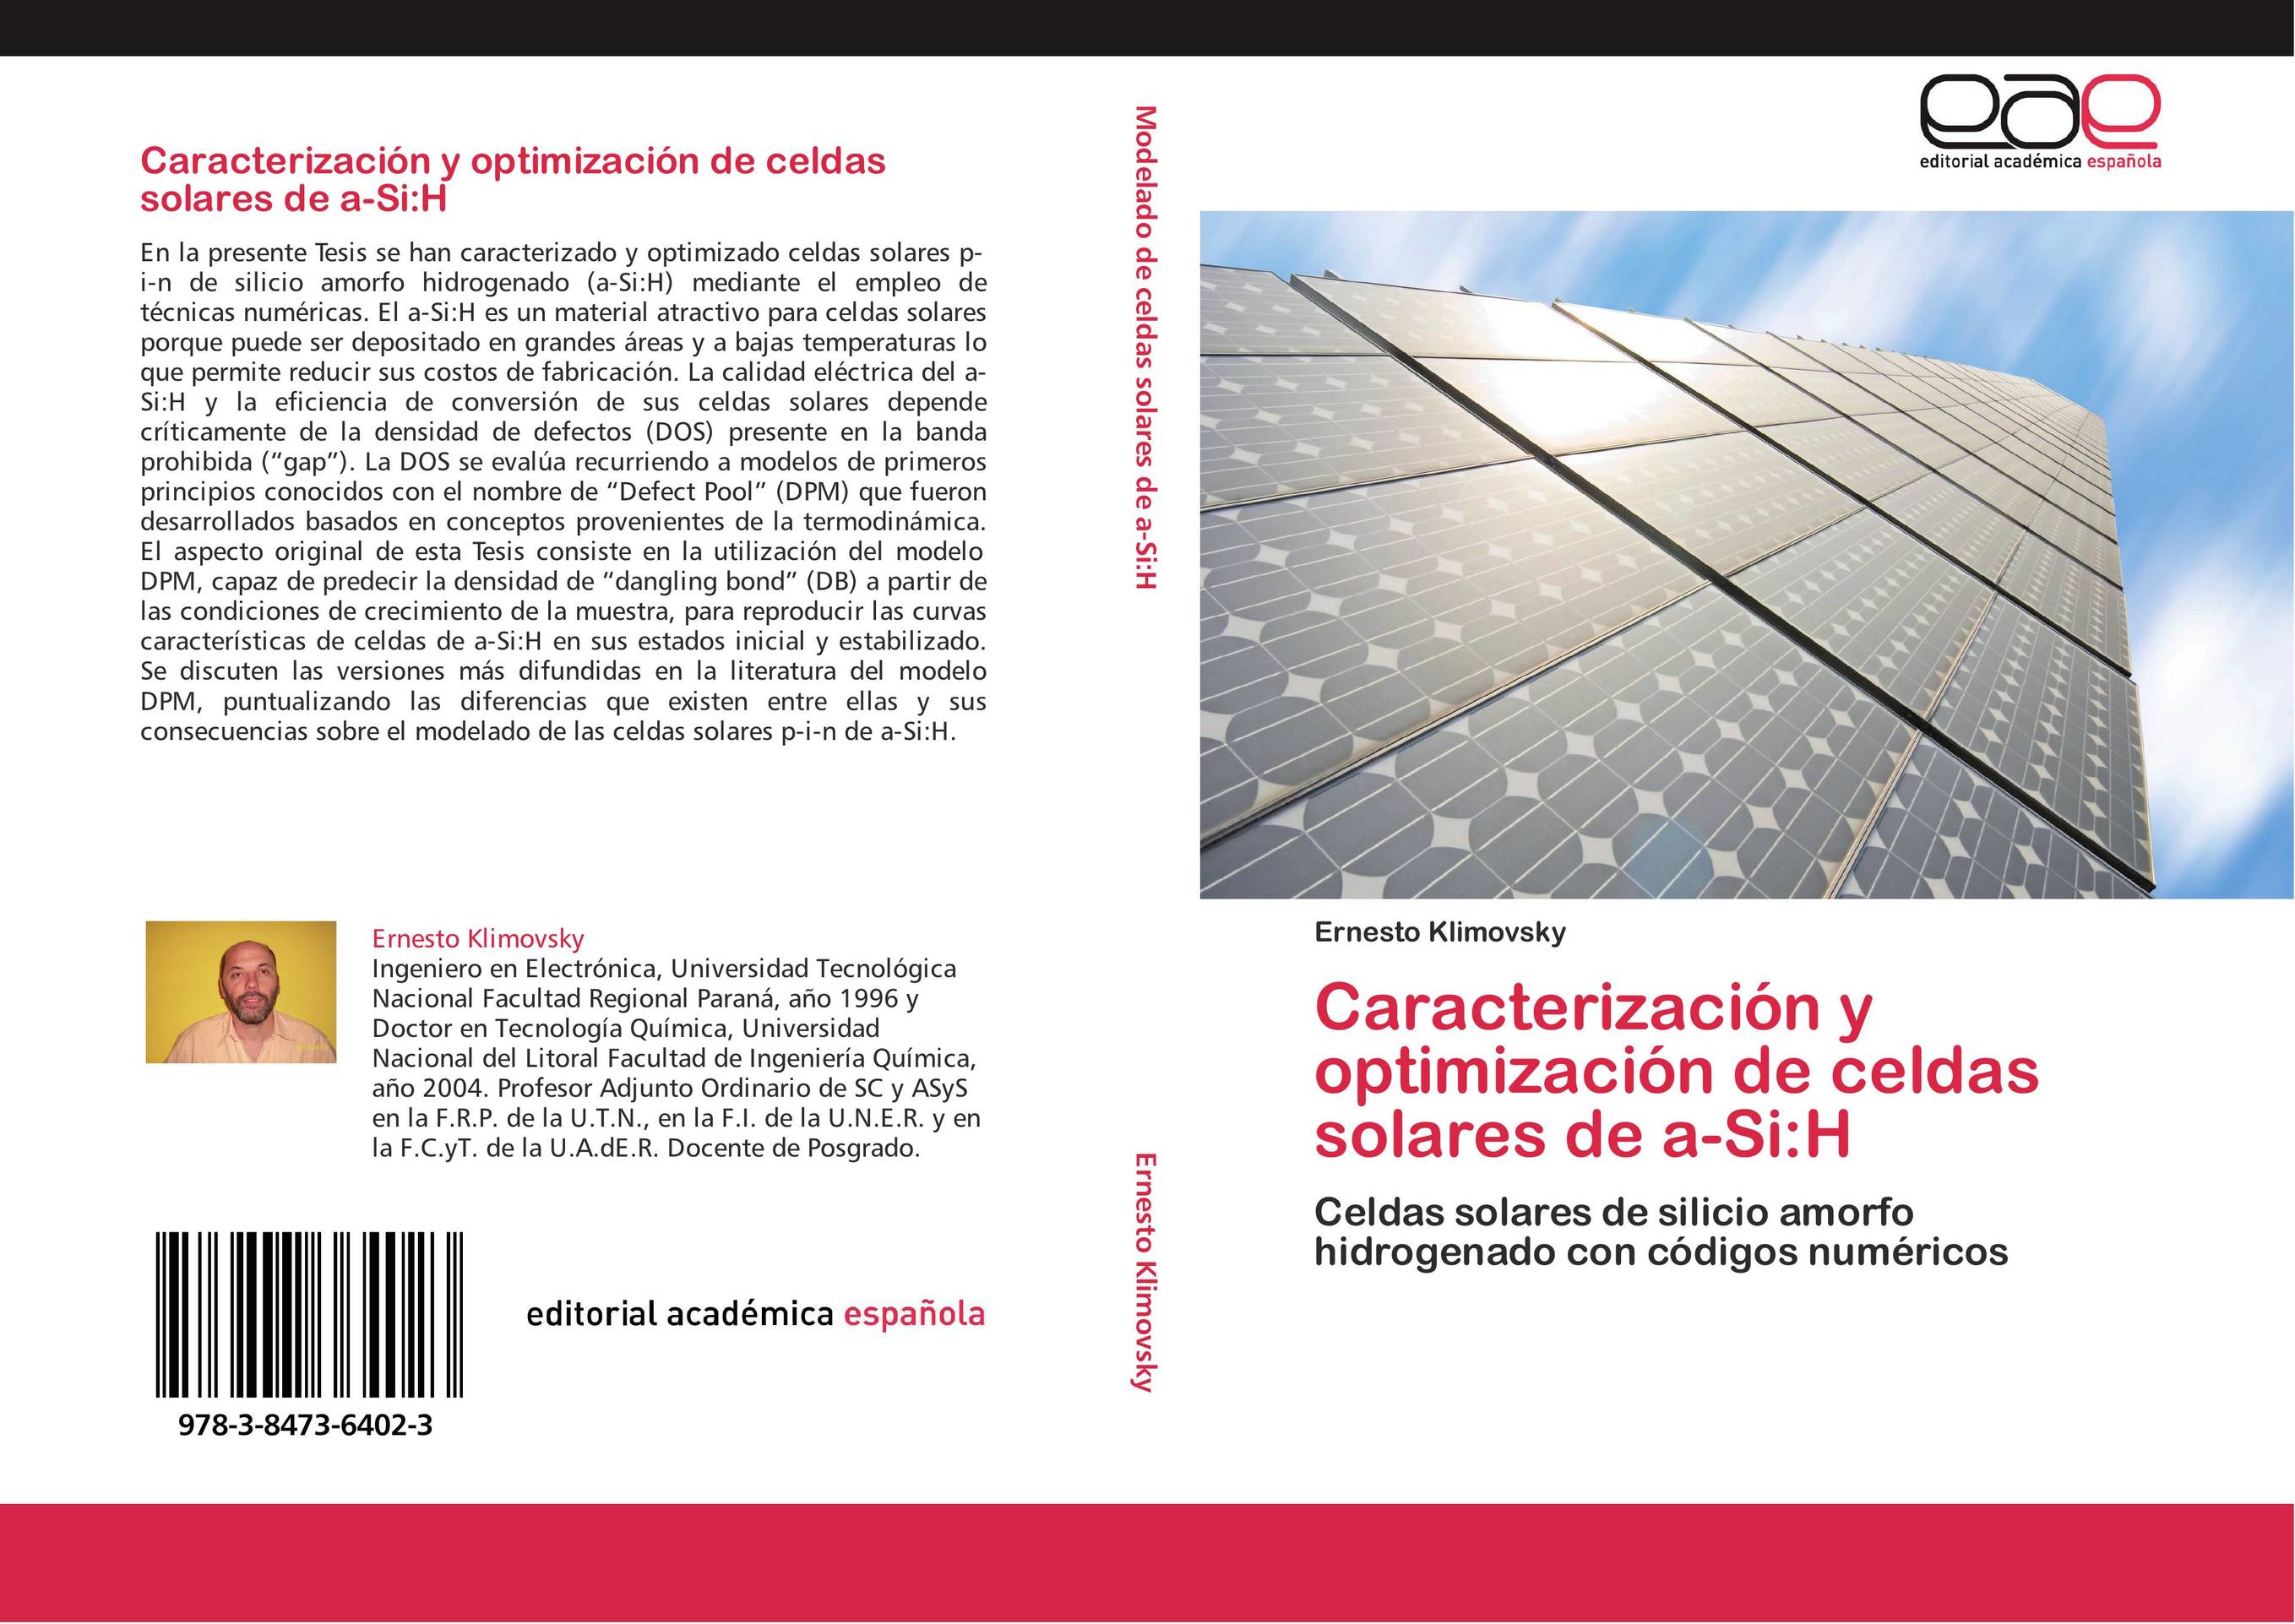 Caracterización y optimización de celdas solares de a-Si:H